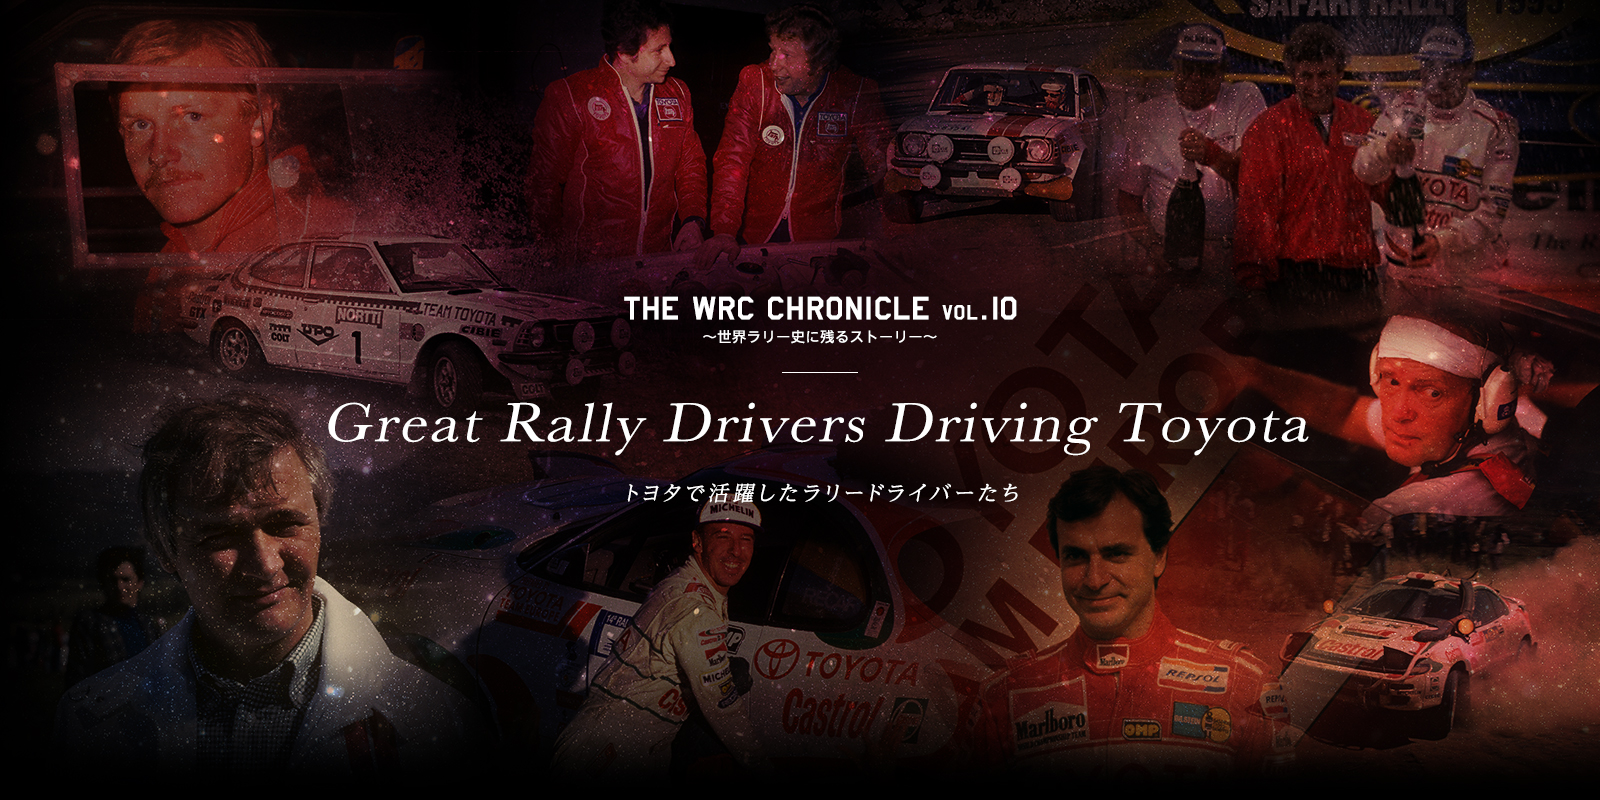 Great Rally drivers driving Toyota 〜トヨタで活躍したラリードライバーたち〜 | The WRC Chronicle vol.10